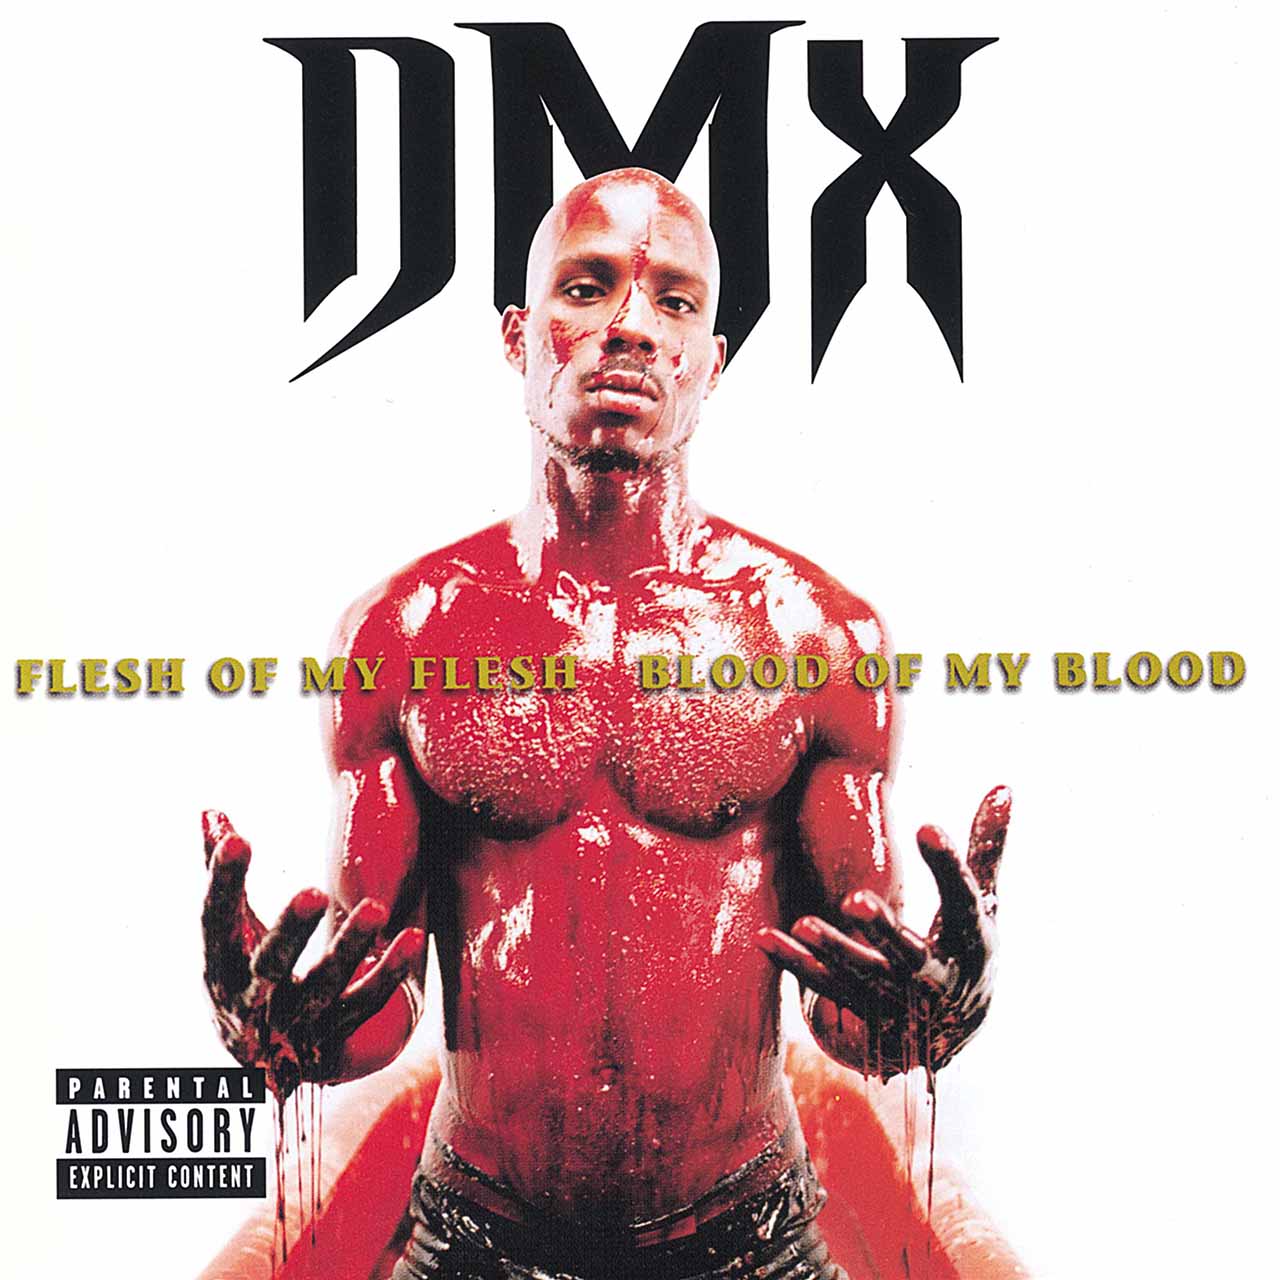 How ‘Flesh of My Flesh, Blood of My Blood’ Won DMX A Million Dollar Bet #DMX